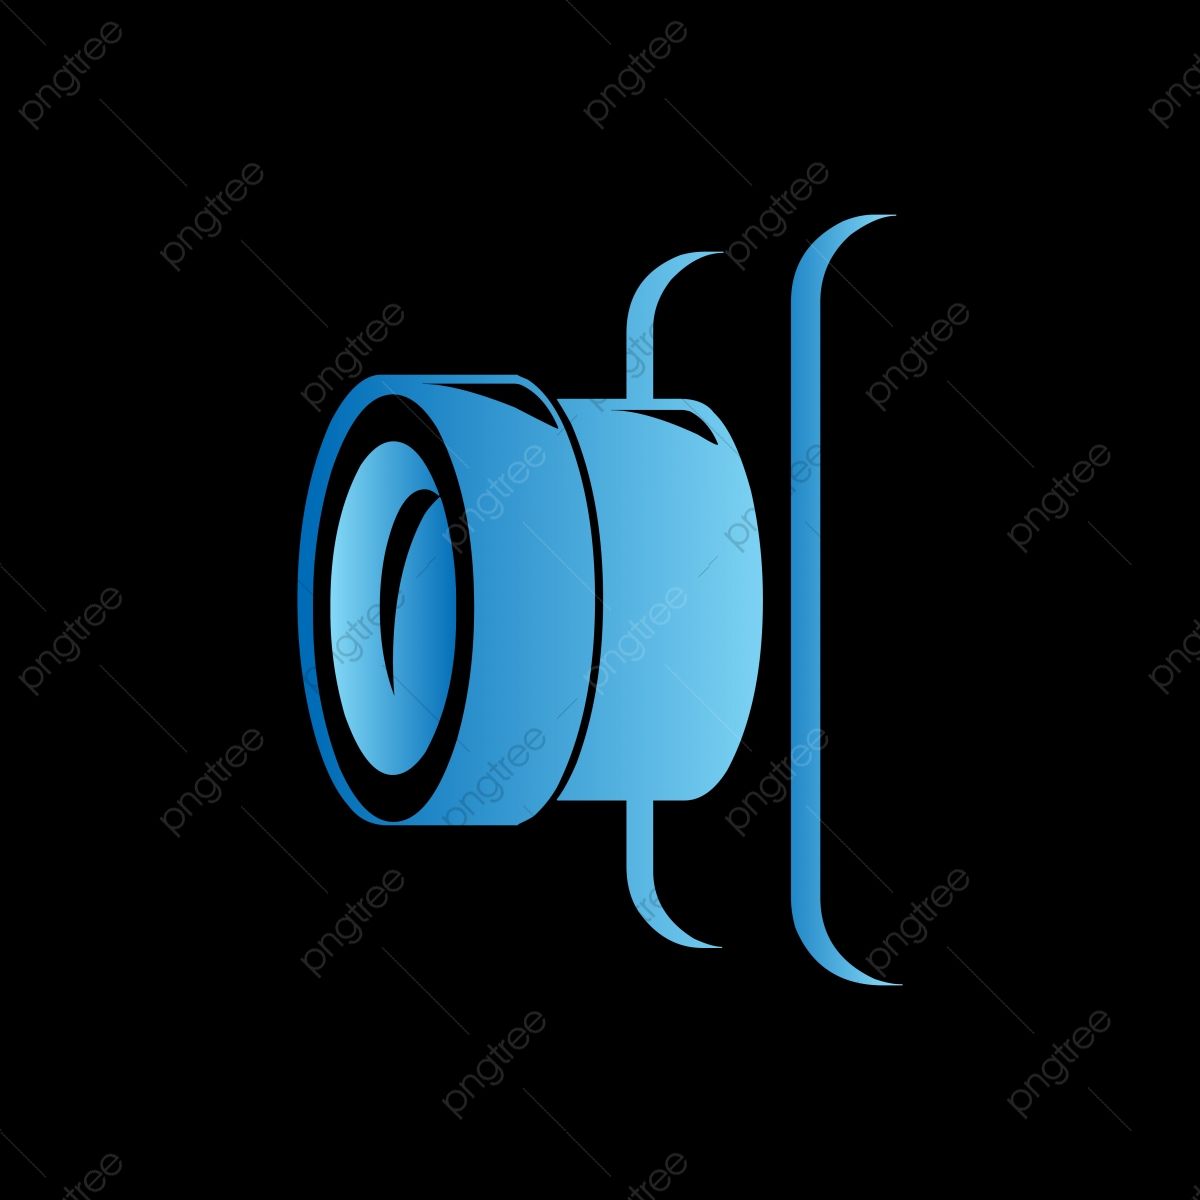 Camera Logo PNG Image. Vector and PSD Files